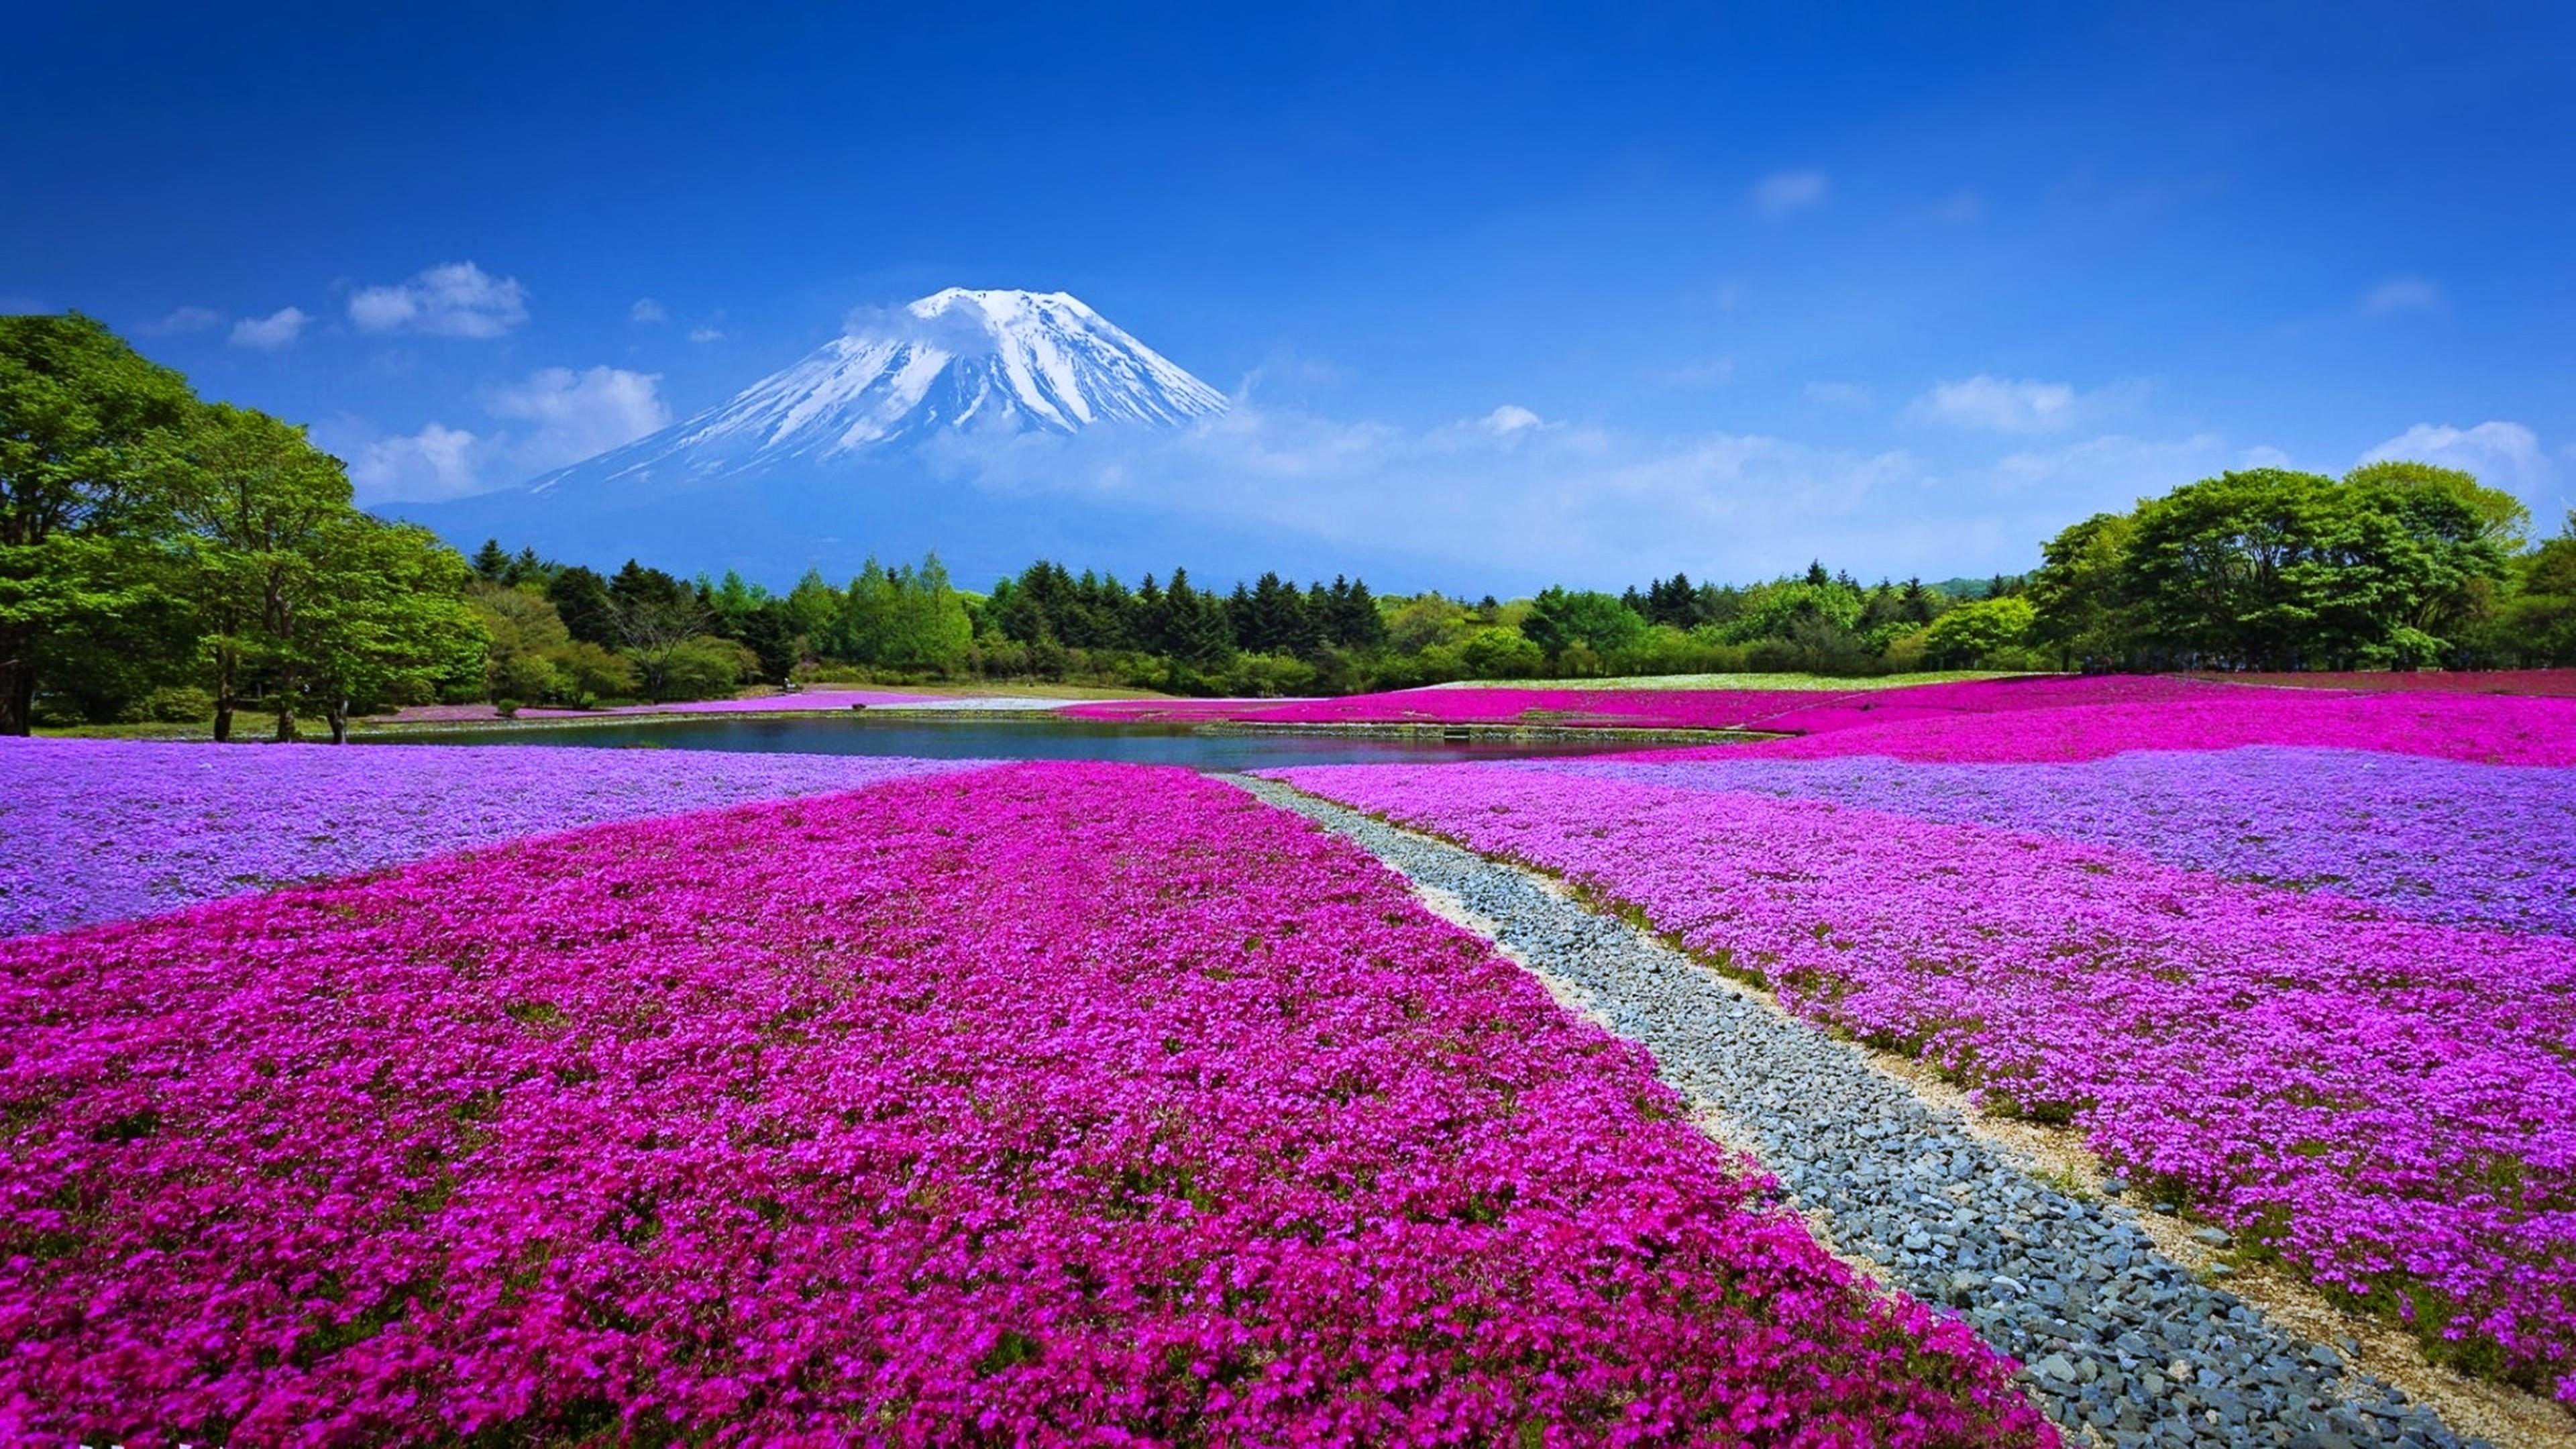 Mount Fuji Landscape, Japan 4K UltraHD Wallpaper. Wallpaper Studio